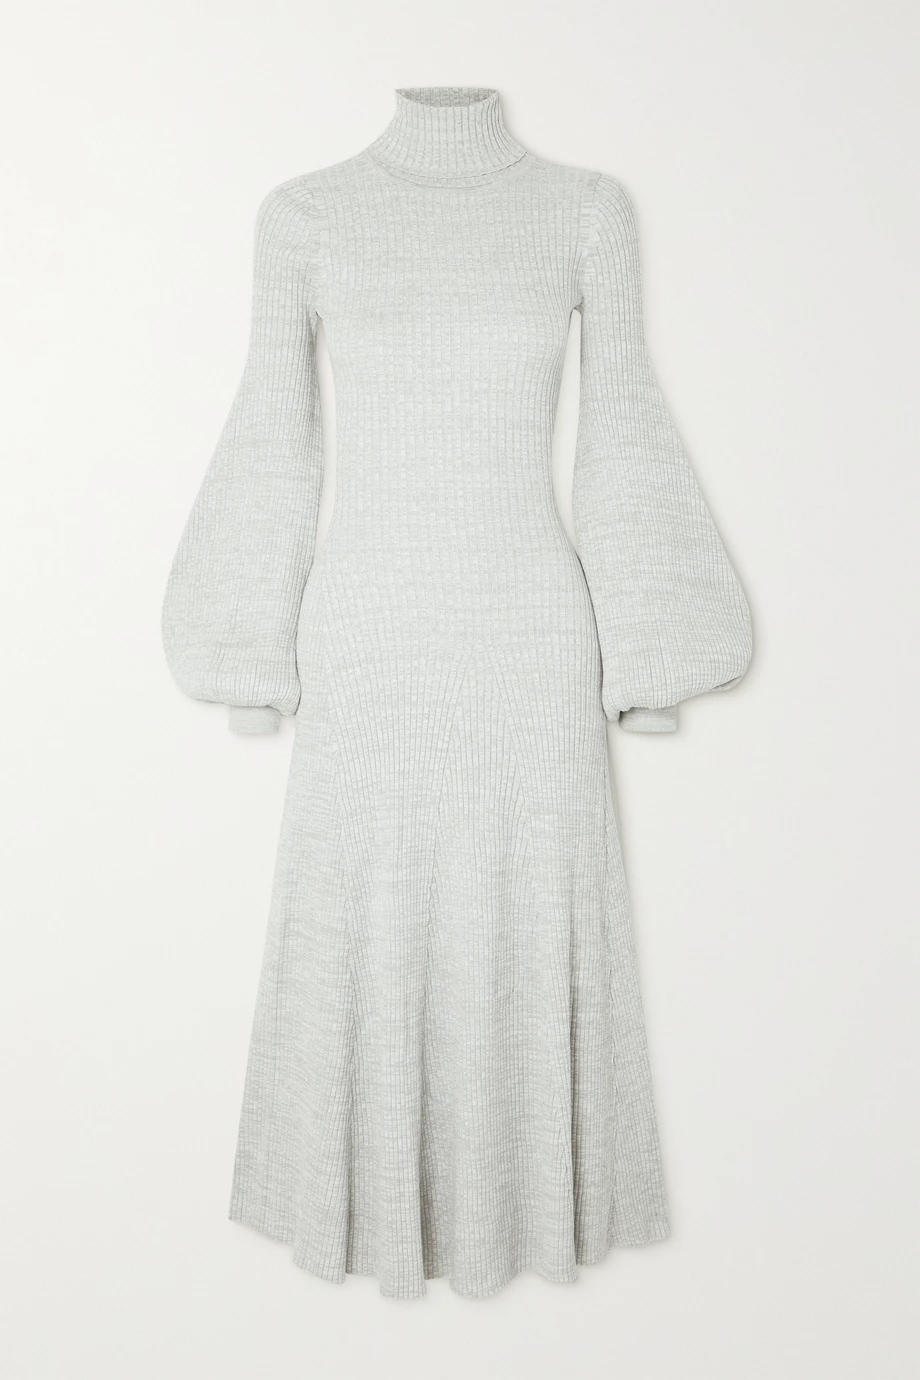 Anna Quan pulover haljina 2021.